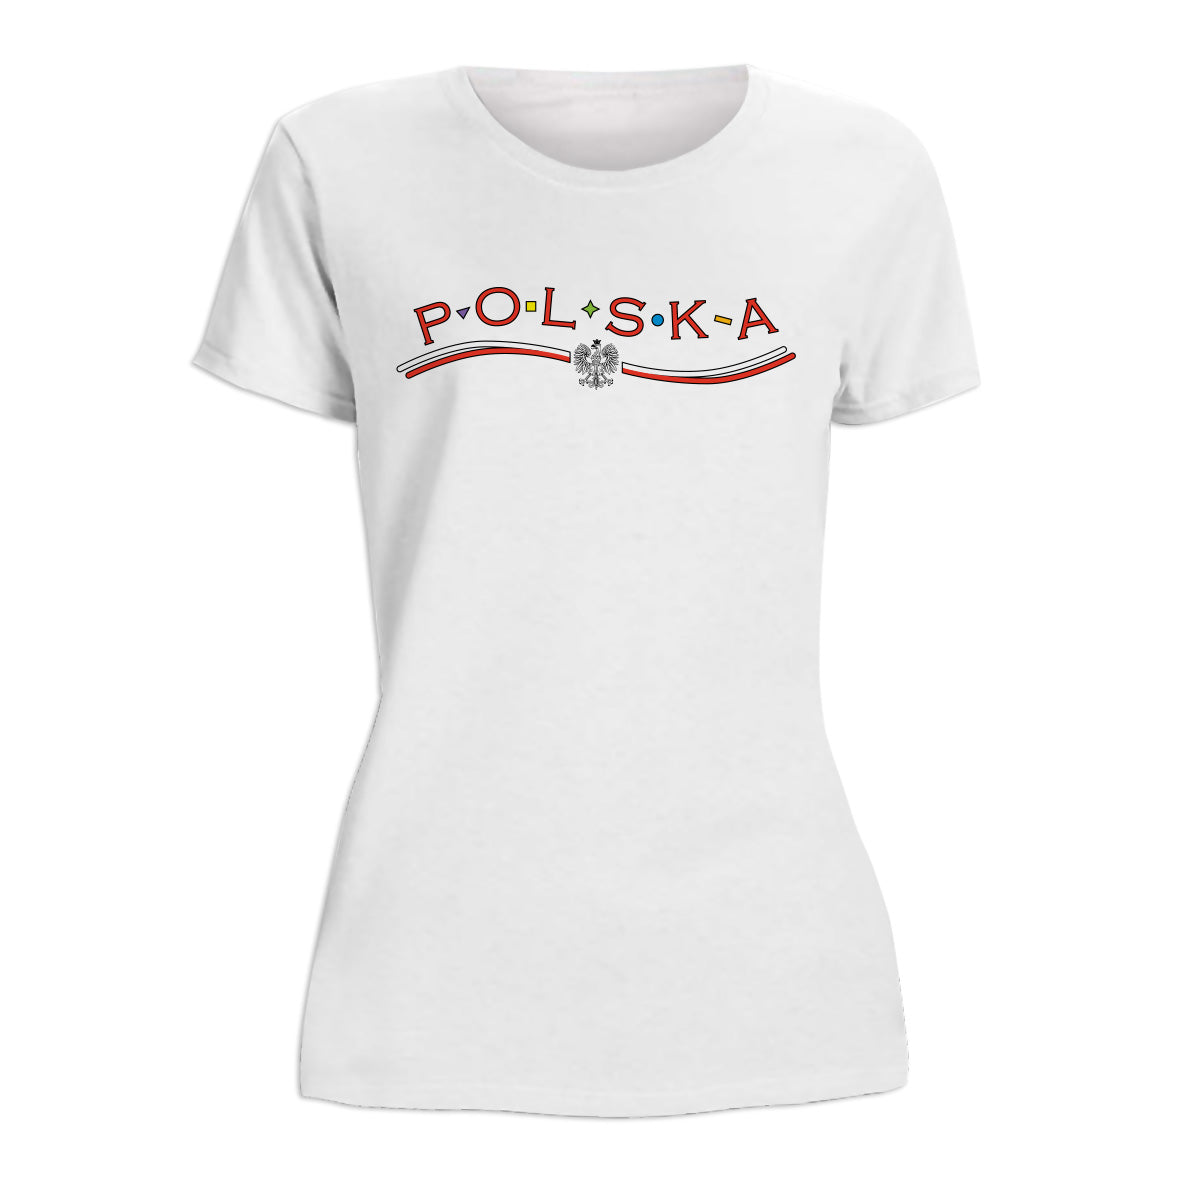 Polska Wave Women's Short Sleeve Tshirt